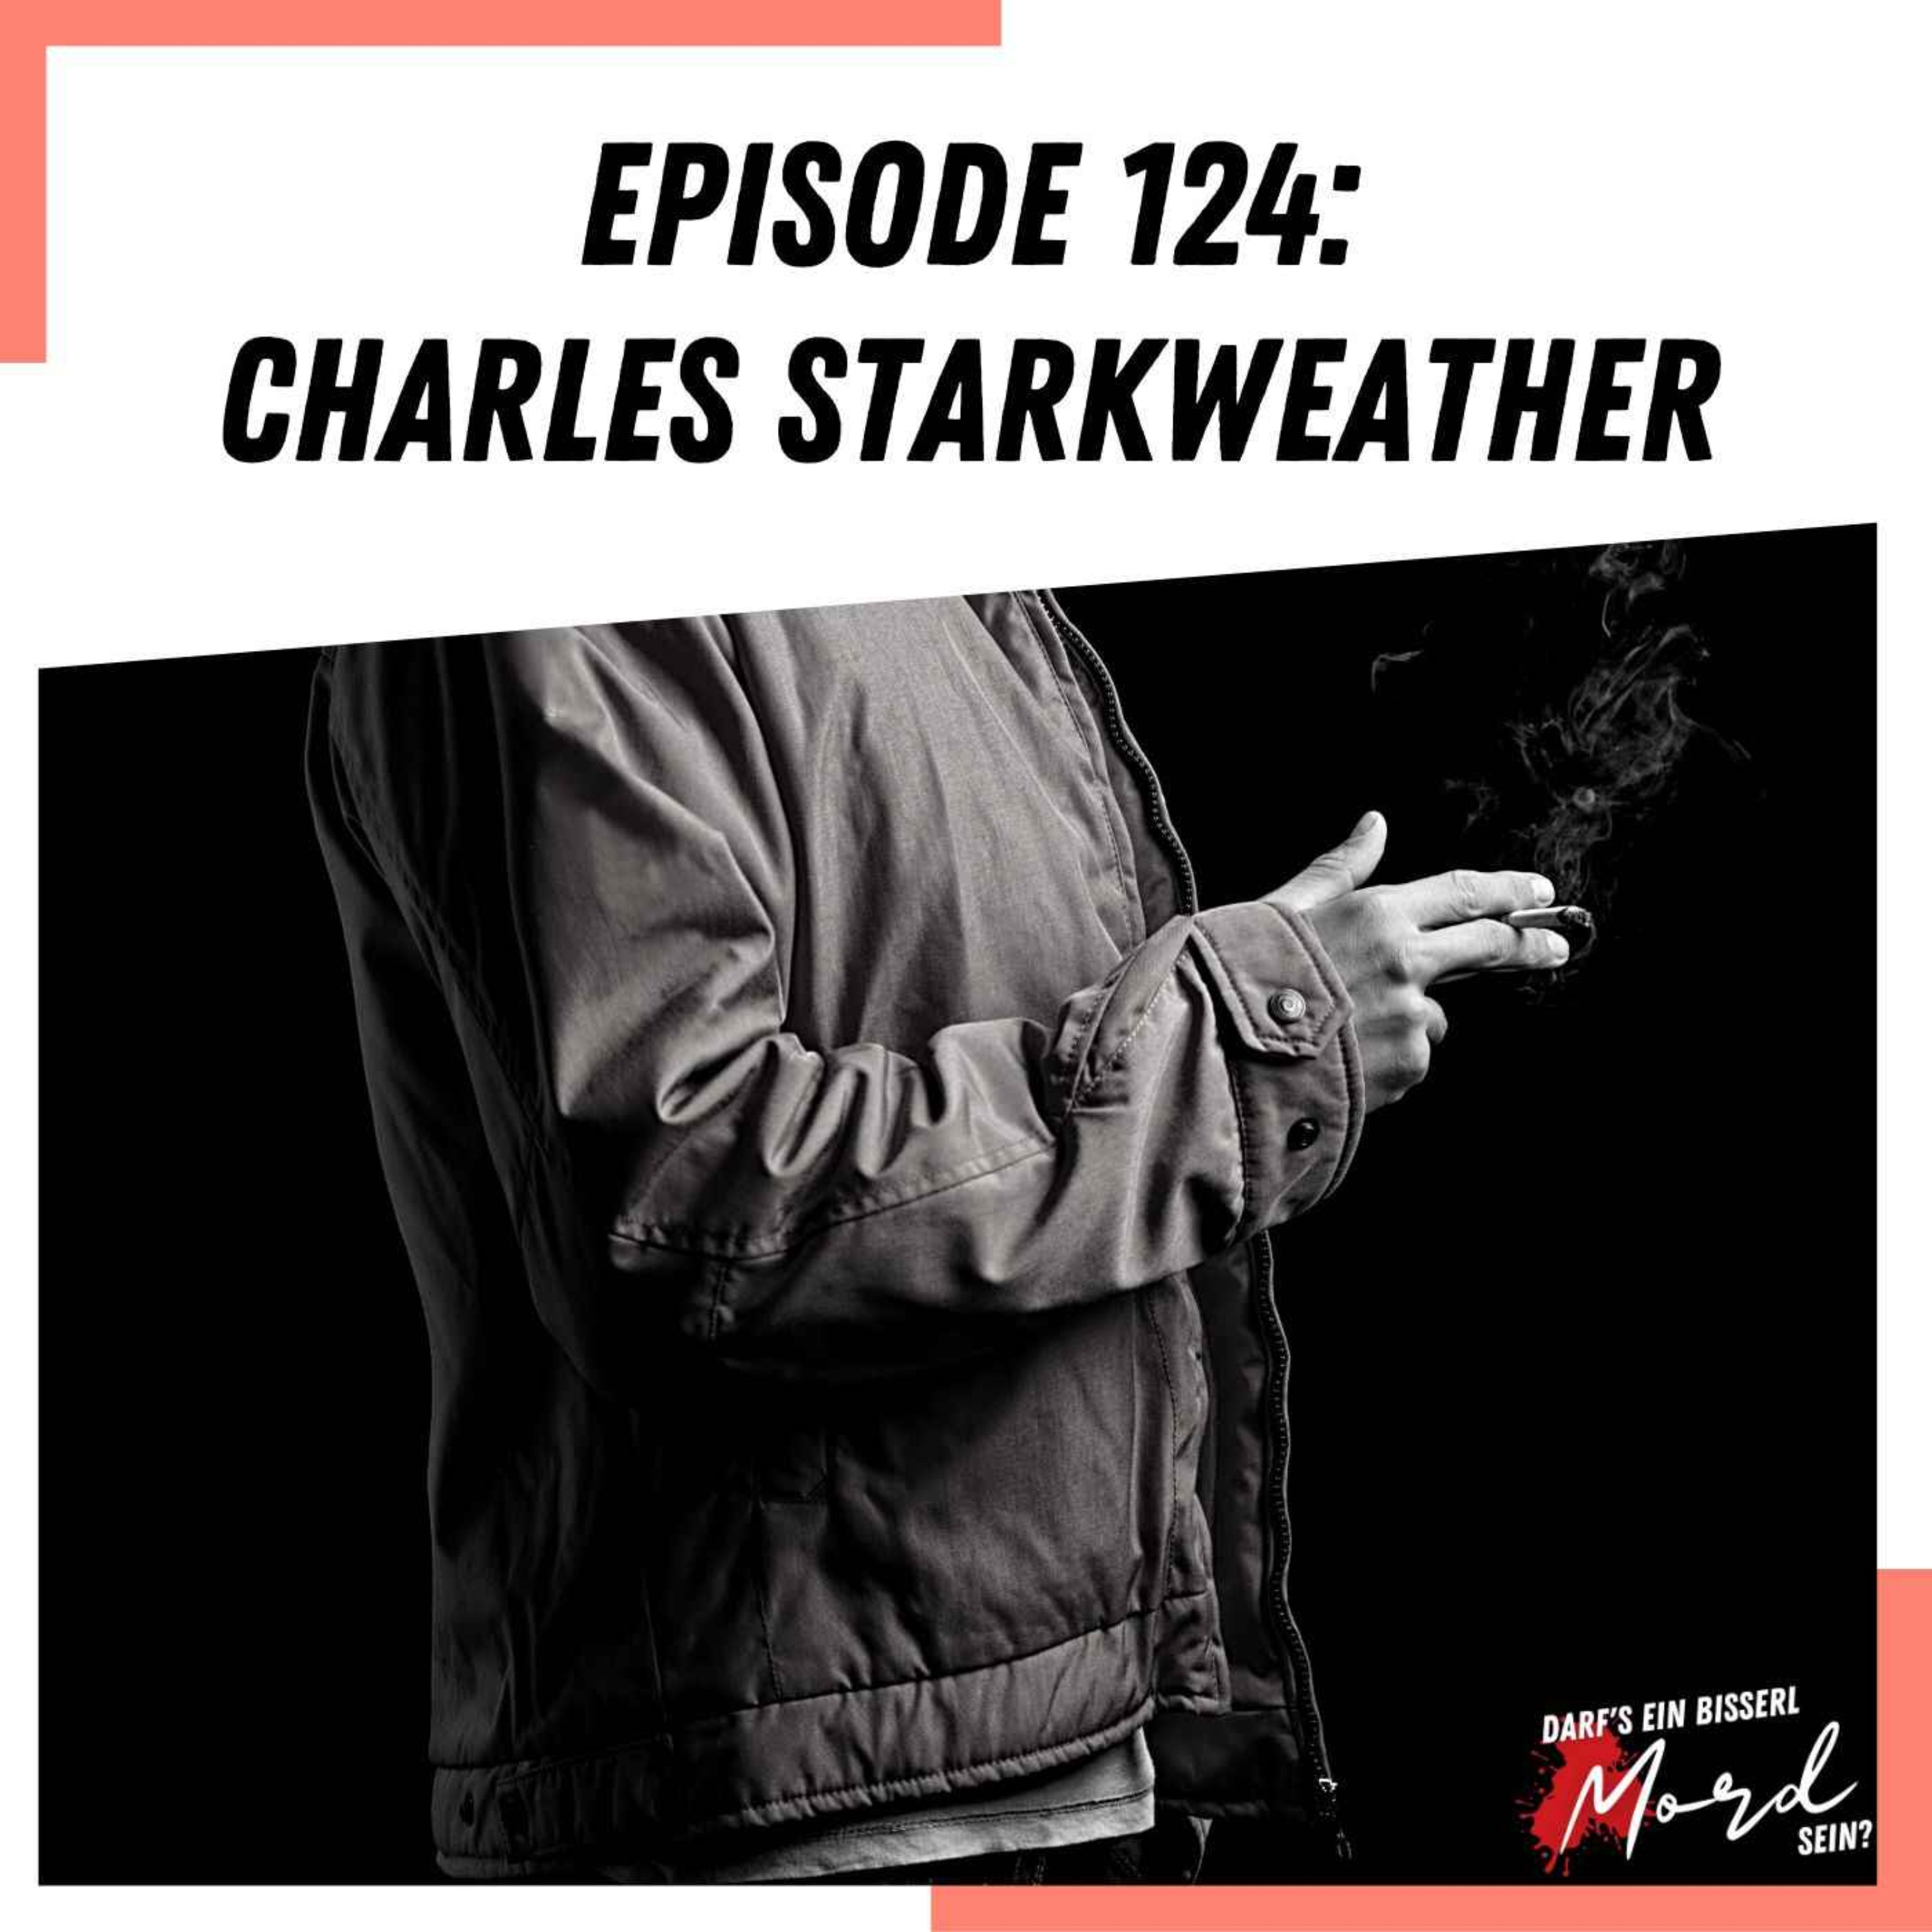 Episode 124: Charles Starkweather (1/2)